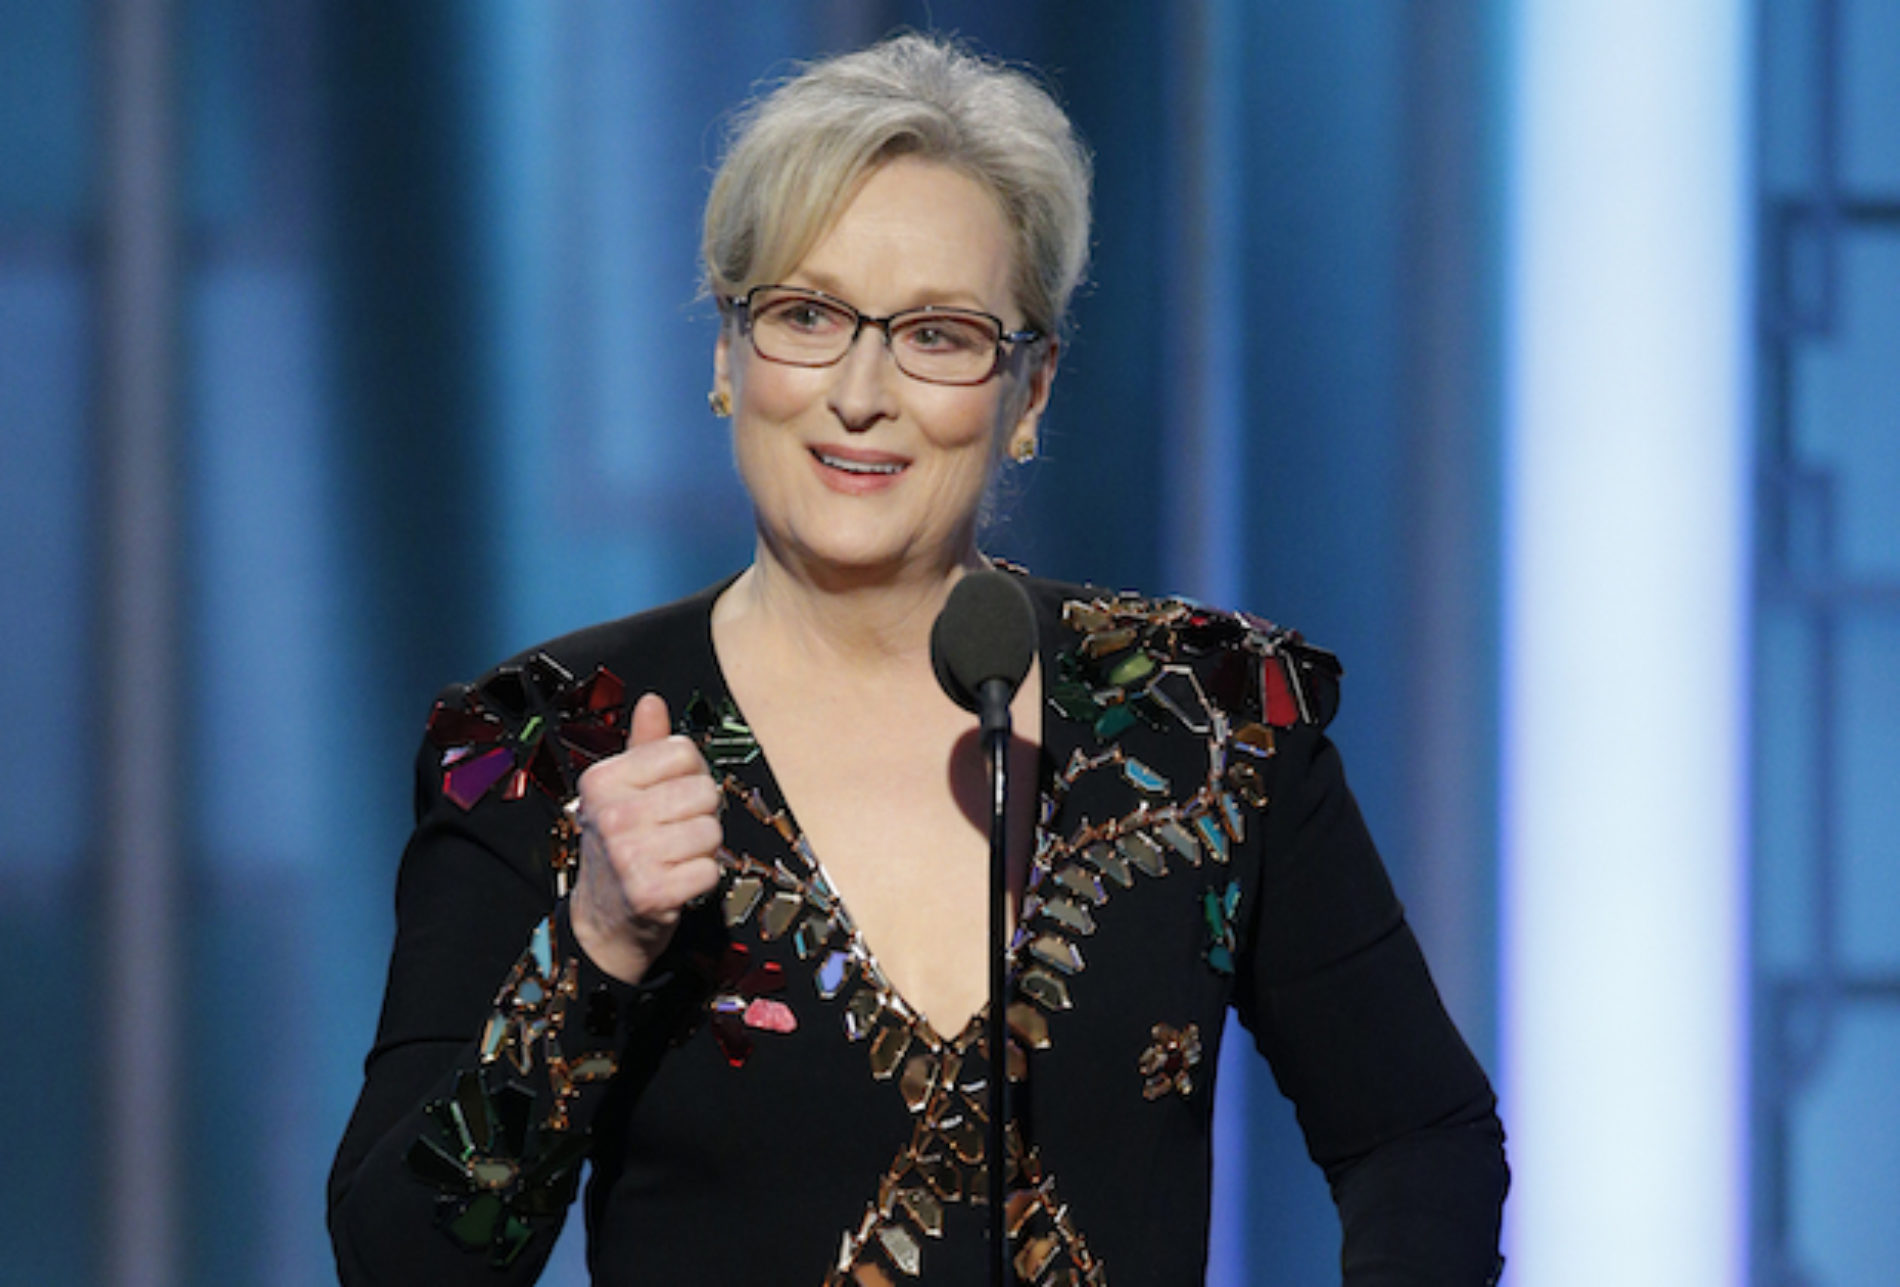 Donald Trump lashes out at Meryl Streep following her Golden Globes speech